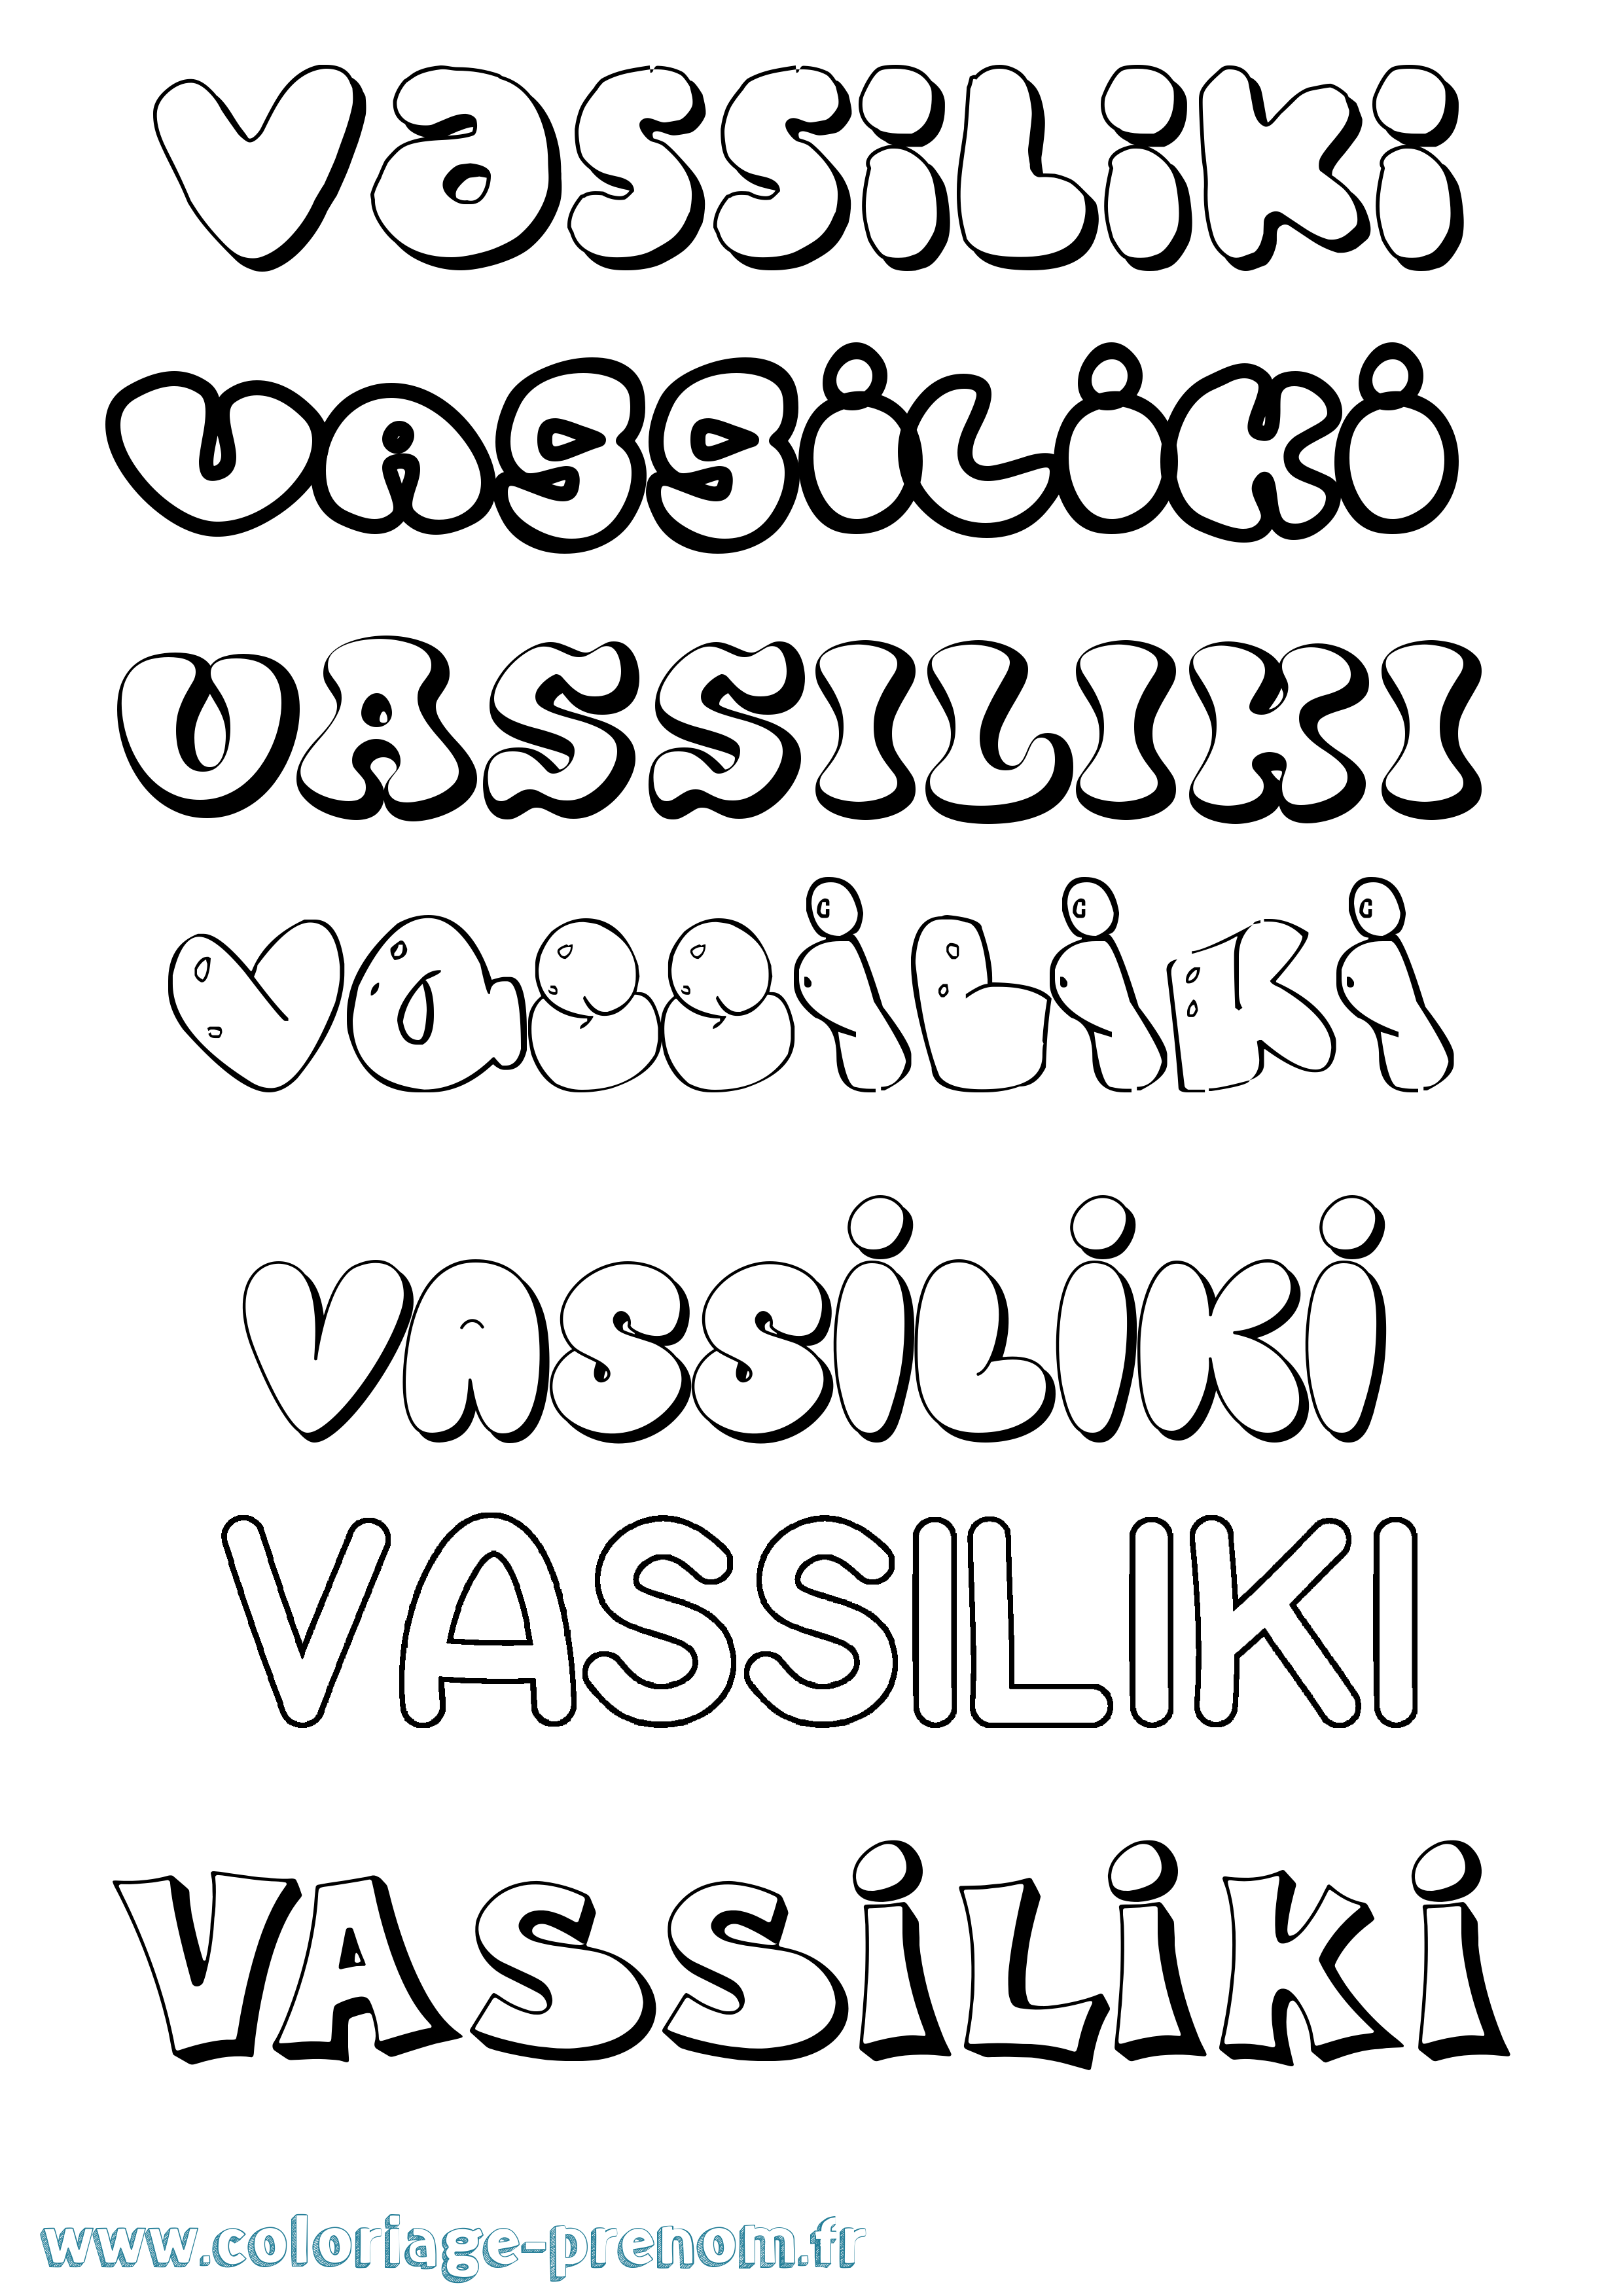 Coloriage prénom Vassiliki Bubble